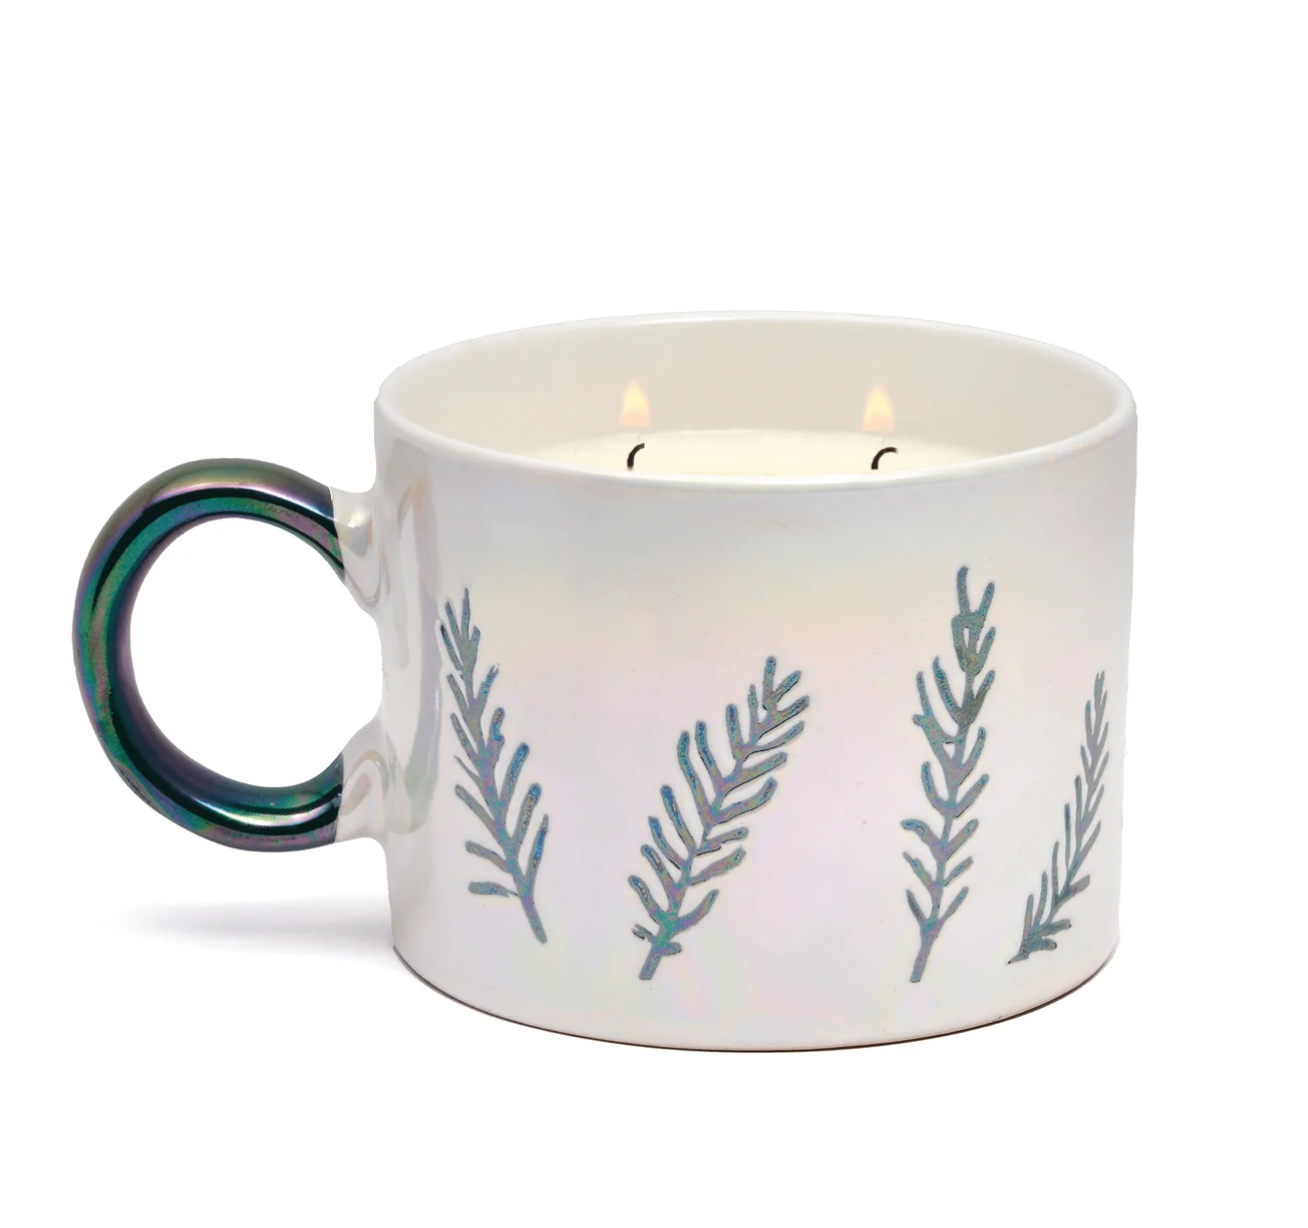 paddy-wax-cypress-and-fir-white-ceramic-mug-candle